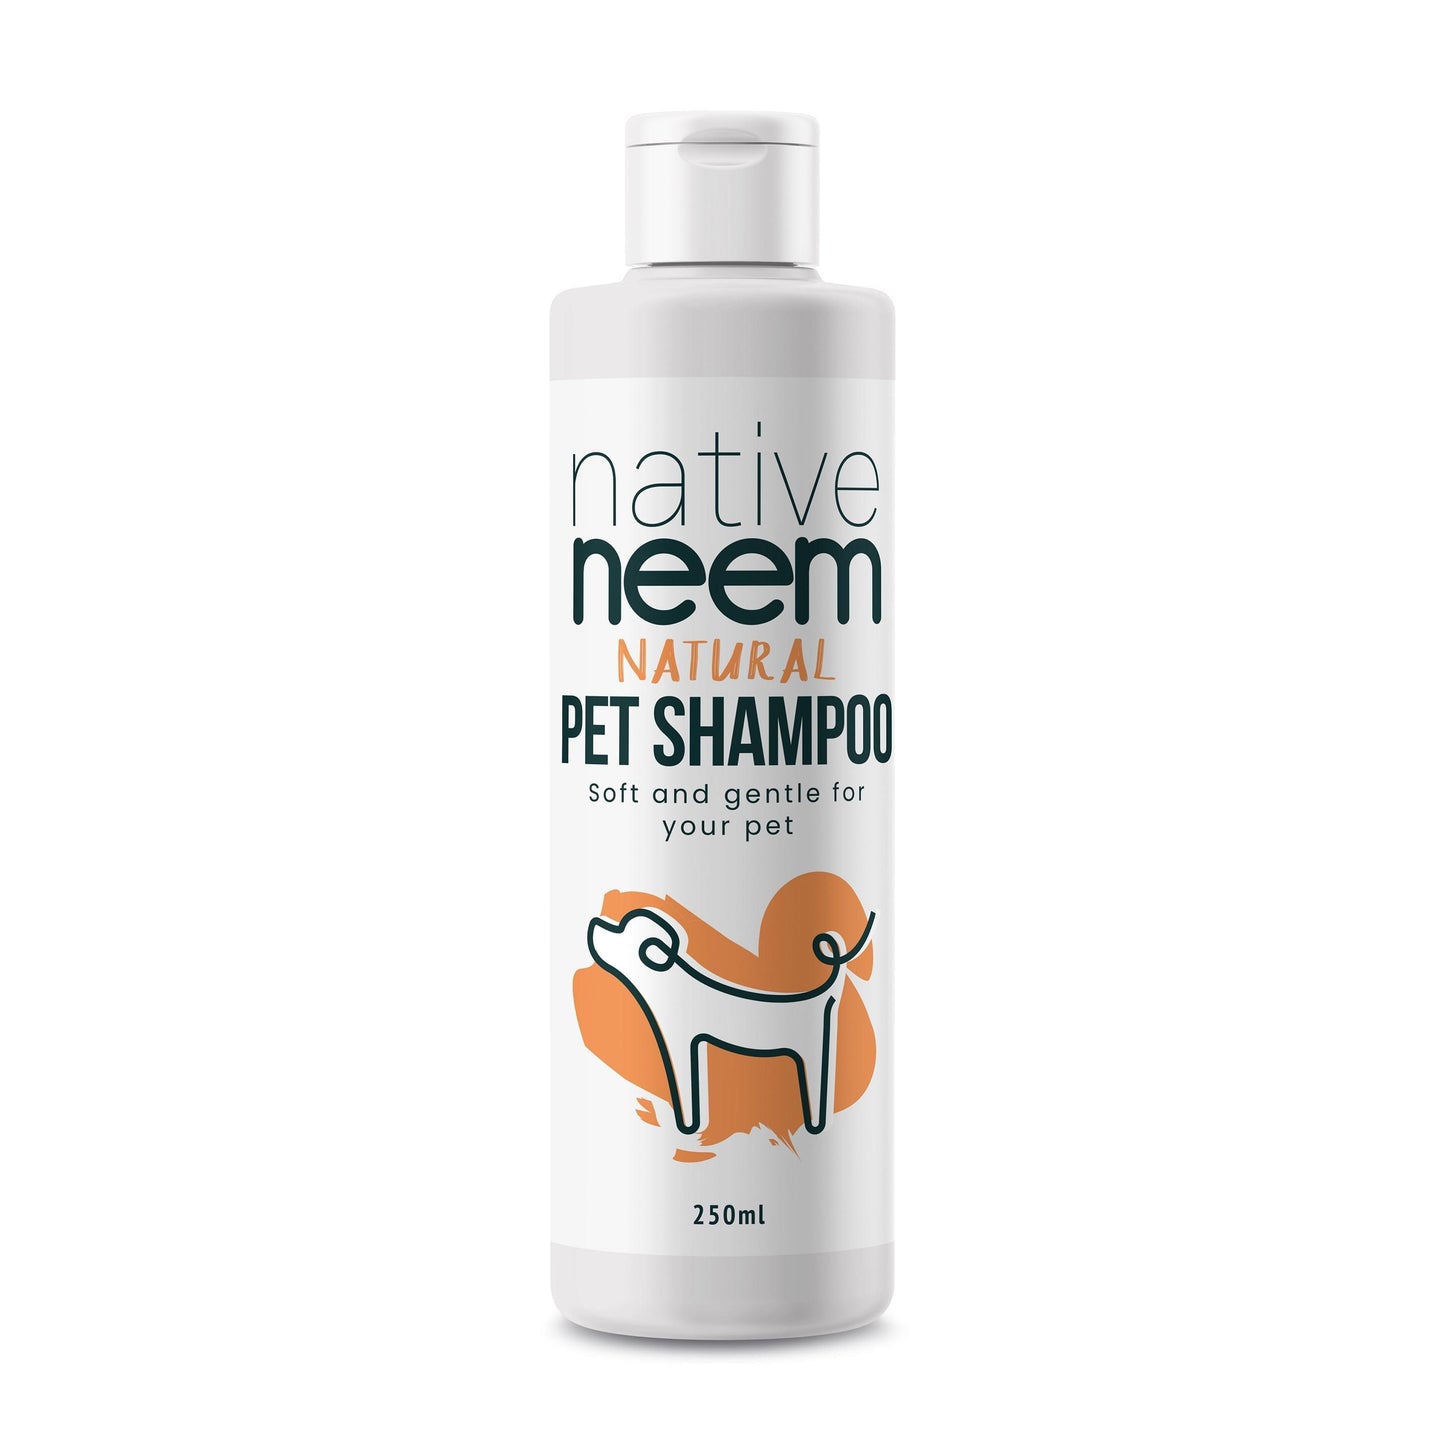 Organic Neem Pet Shampoo 250ml - NativeNeem